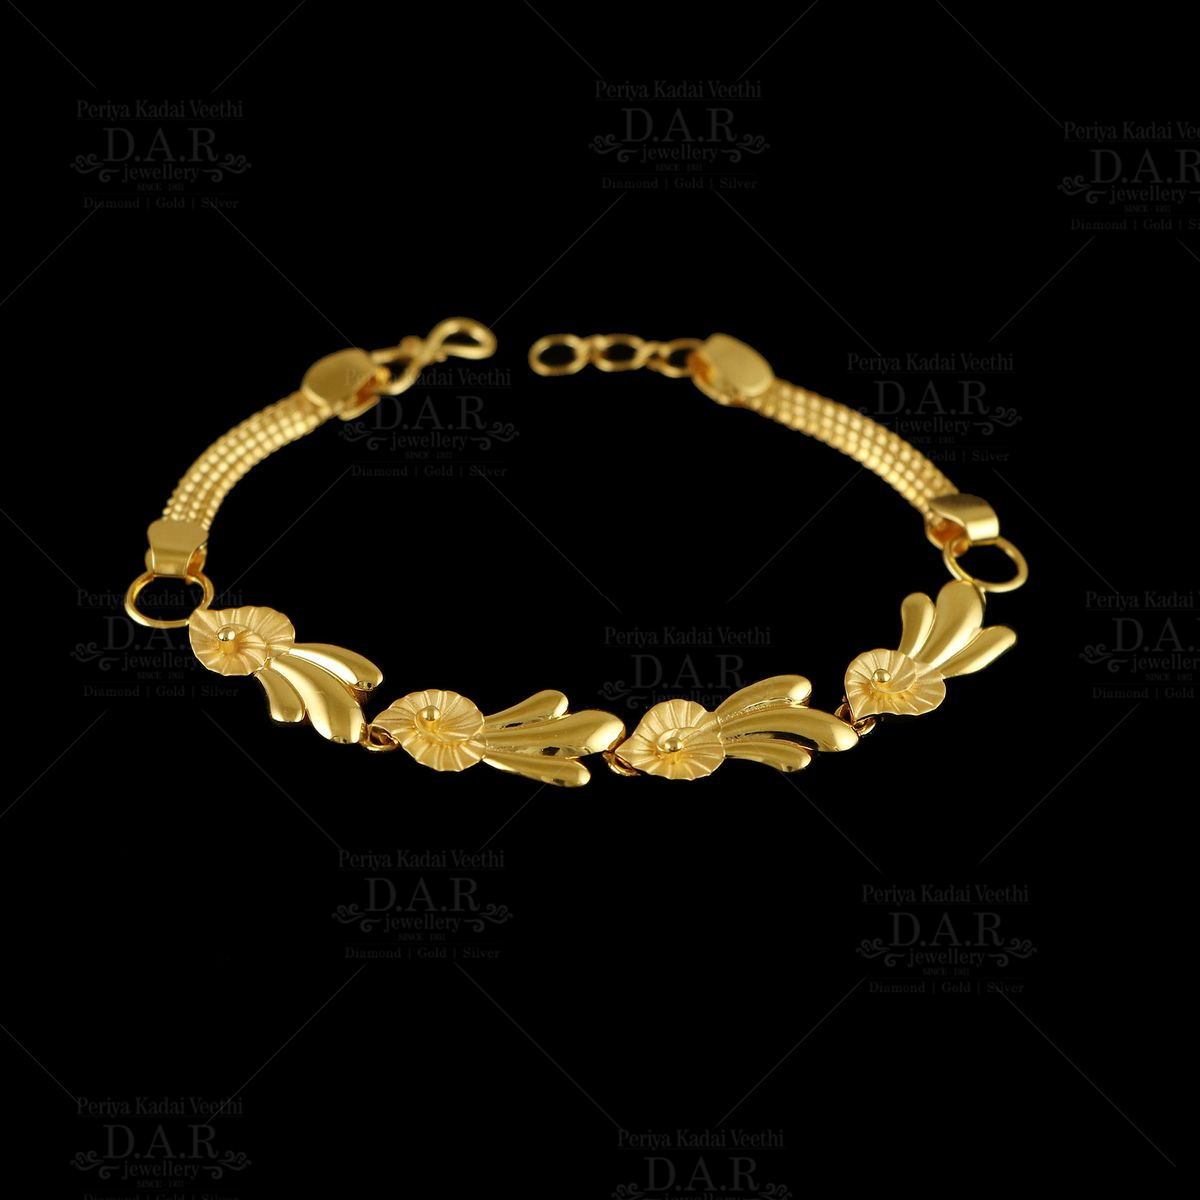 22K Gold Cuff for Men - Bracelet - 235-GBR1950 in 57.050 Grams